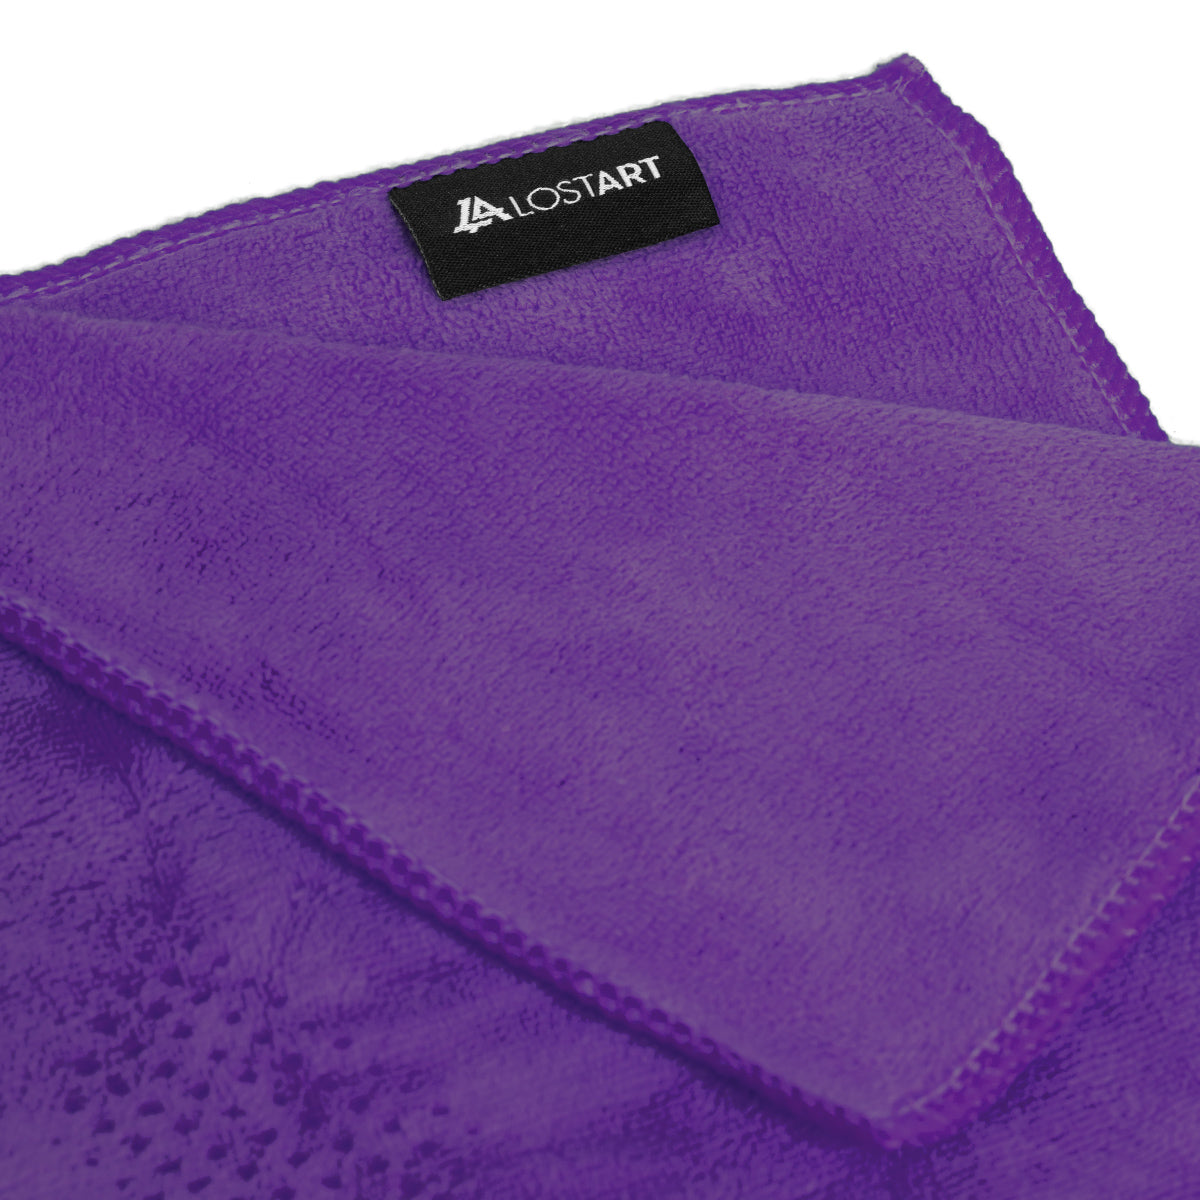 Lost Art Canada - purple rink rag hand towel folded view